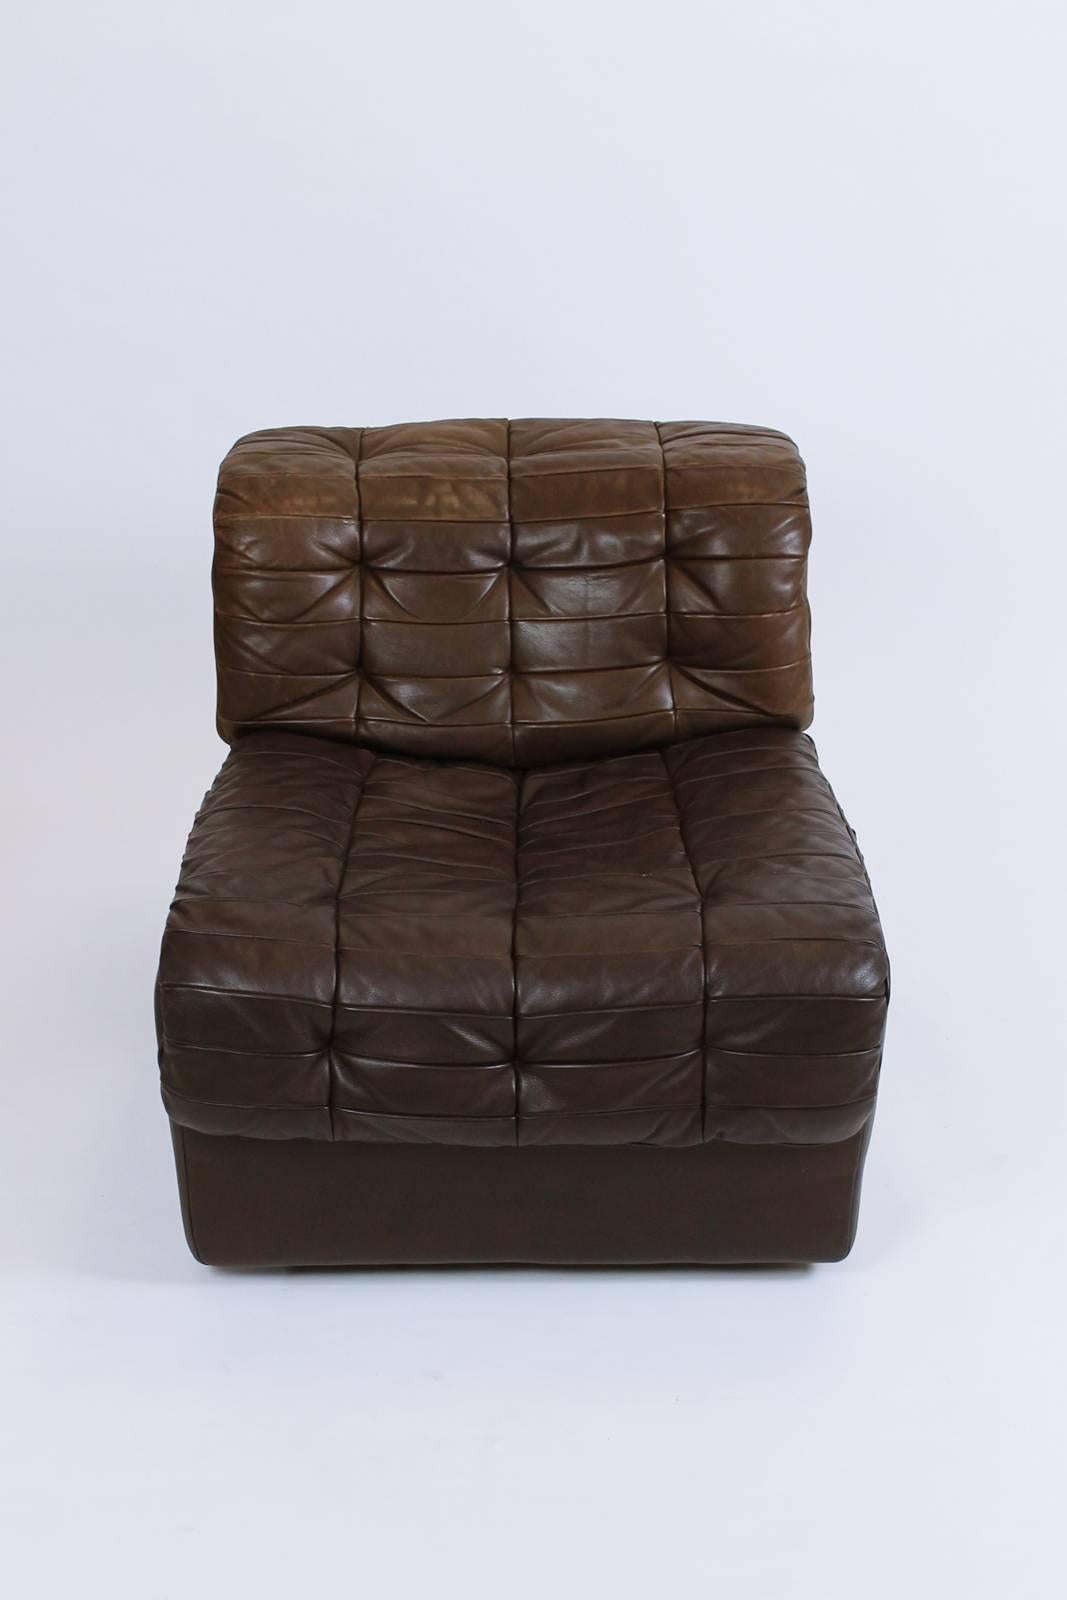 De Sede Model DS-11 Tufted Dark brown Leather Modular Sofa, Switzerland, 1970 9